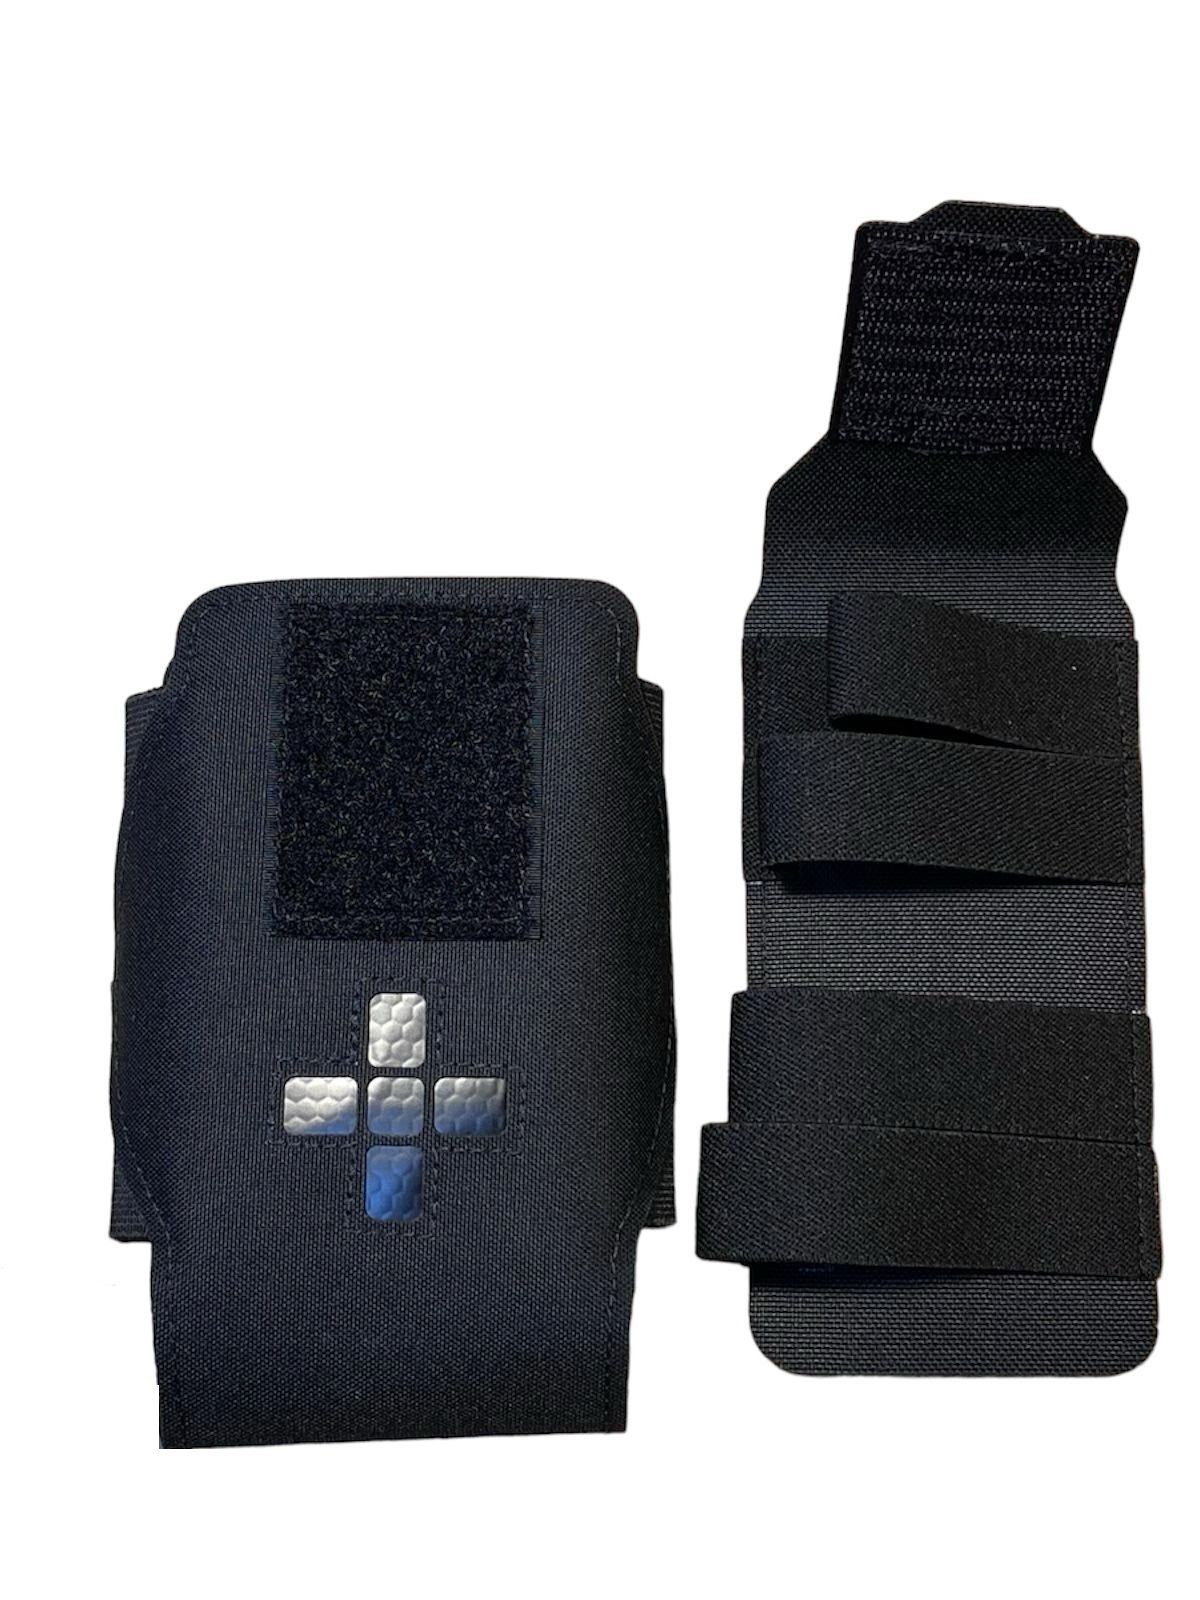 Warrior Laser Cut Small Horizontal Individual First Aid Kit - Black